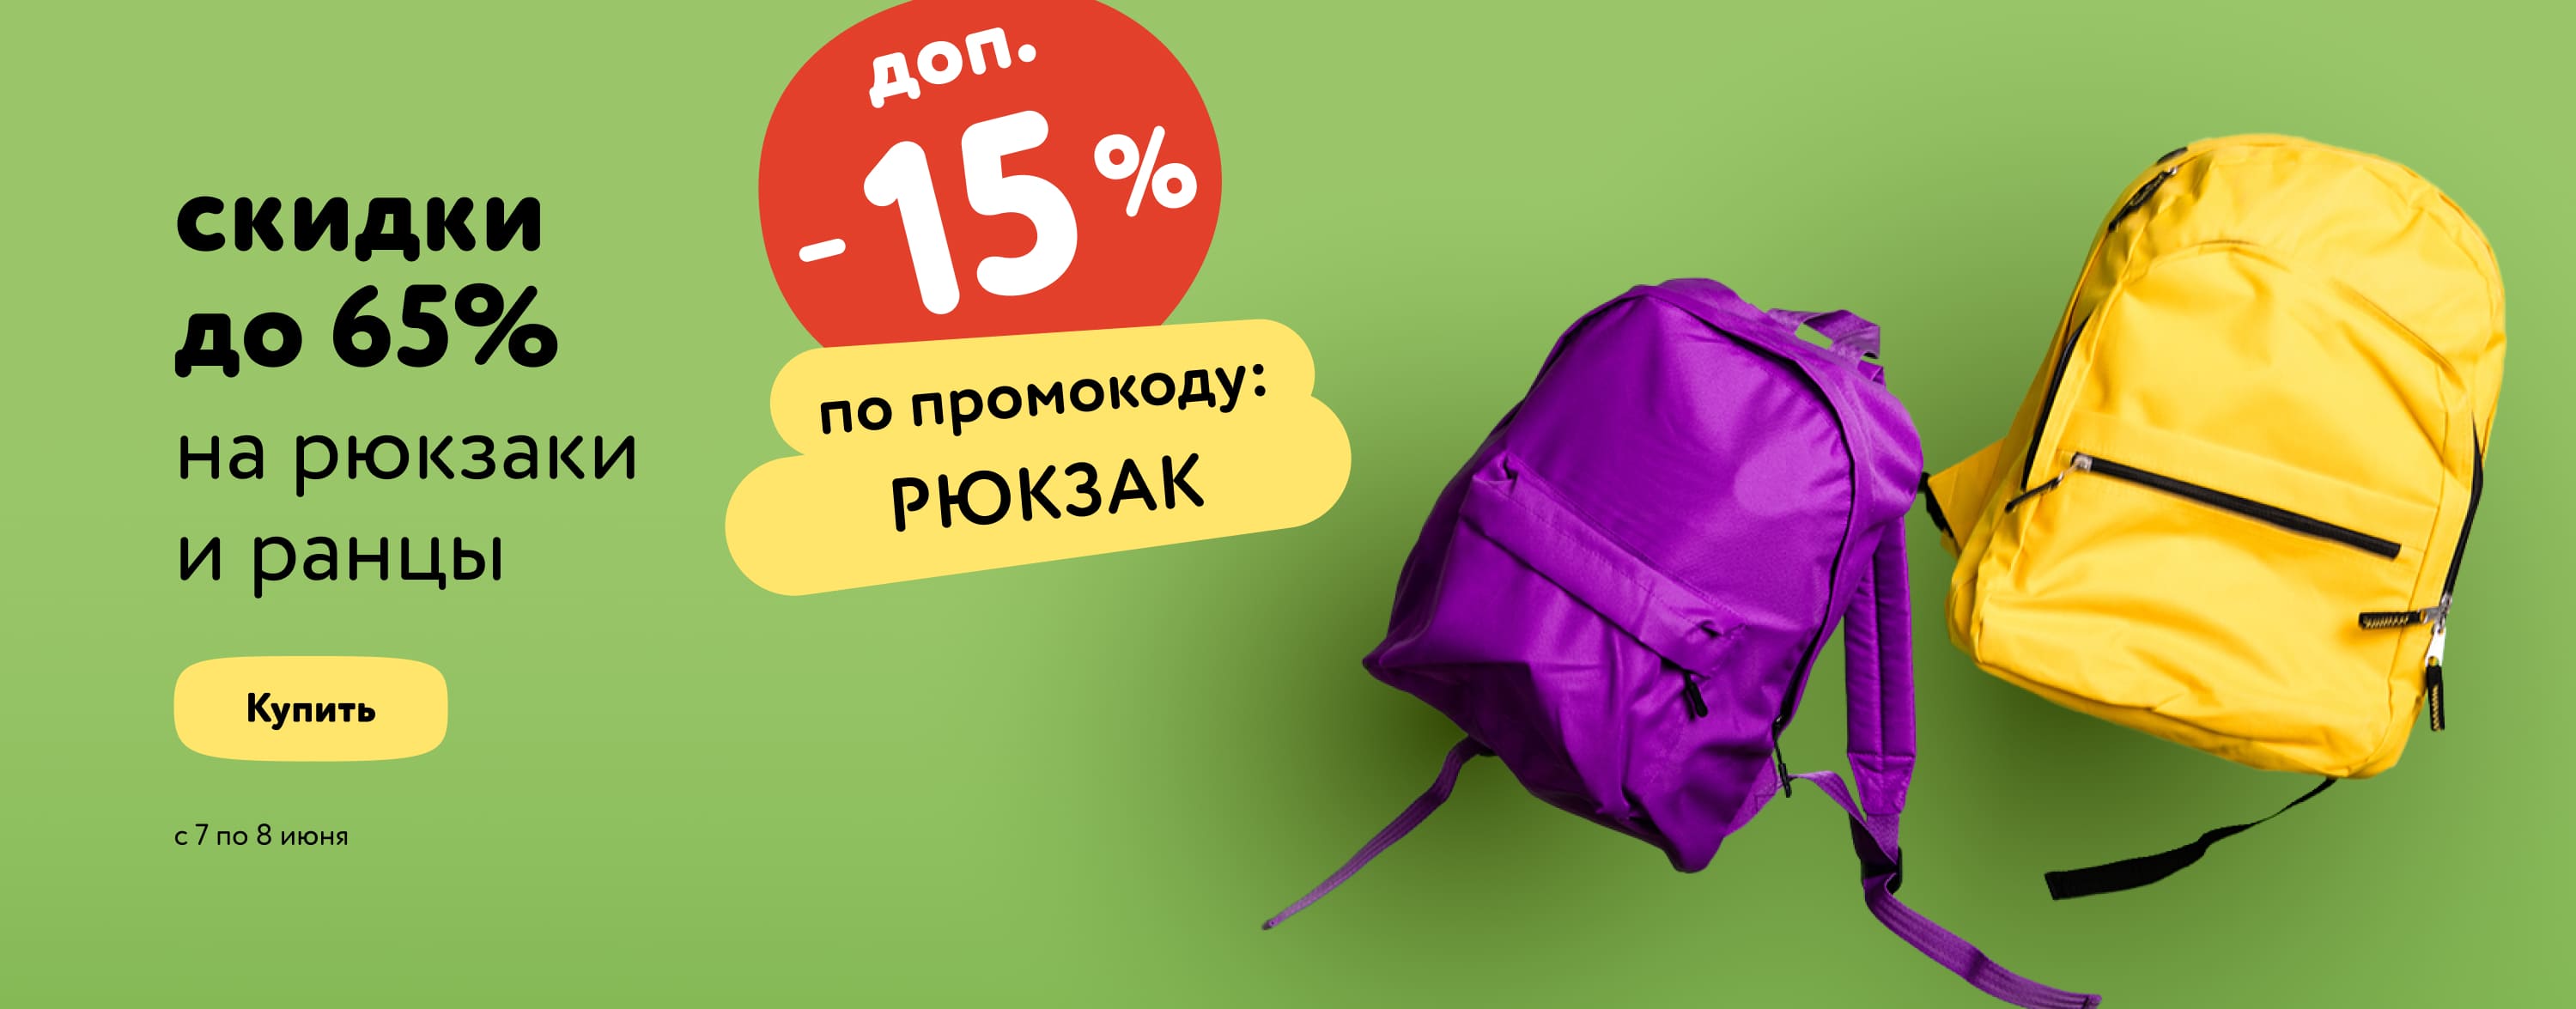 Доп. скидка 15% по промокод у на рюкзаки и ранцы (категории/РЮКЗАК/7-8.06/МП)